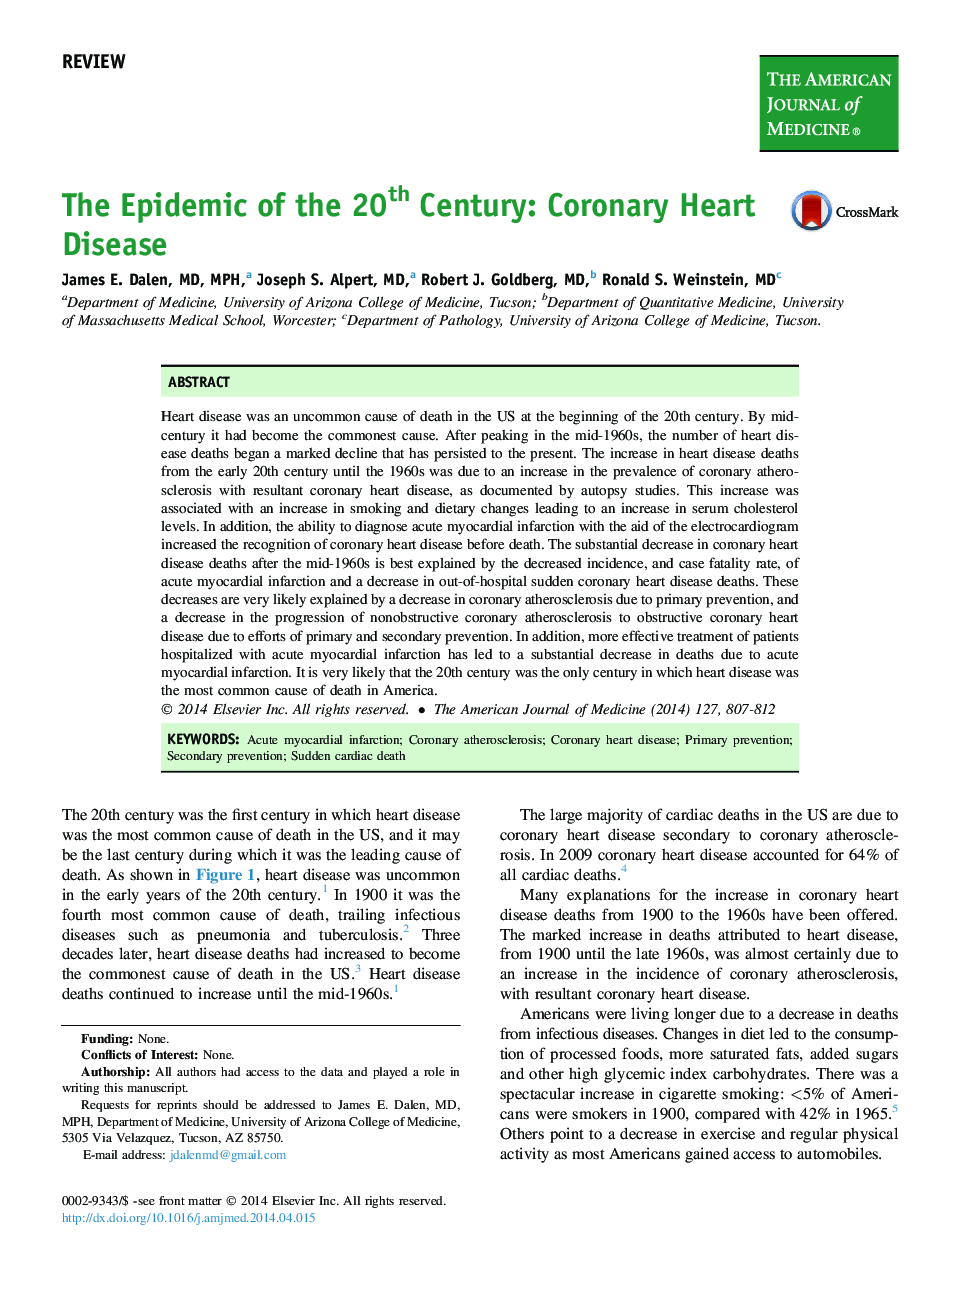 The Epidemic of the 20th Century: Coronary Heart Disease 